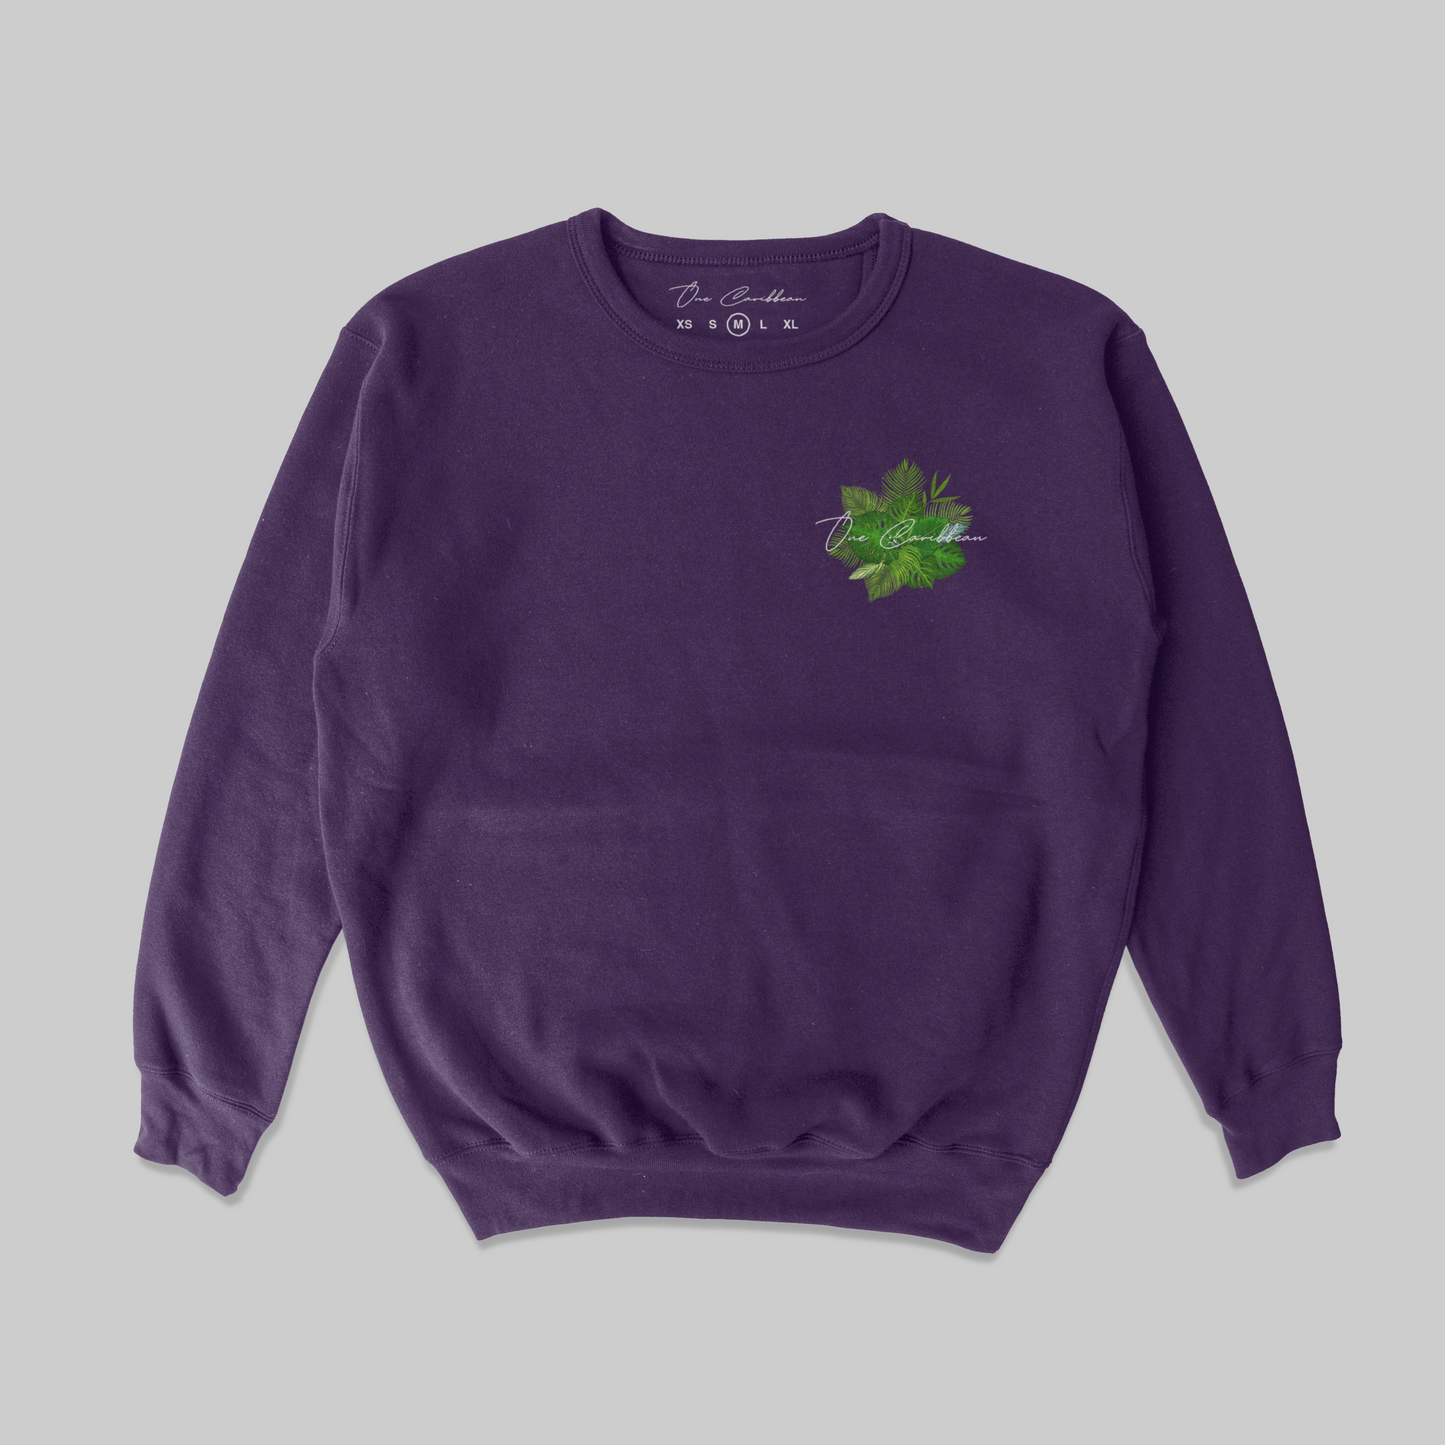 One Caribbean Bush Tee (Purple Sweater)